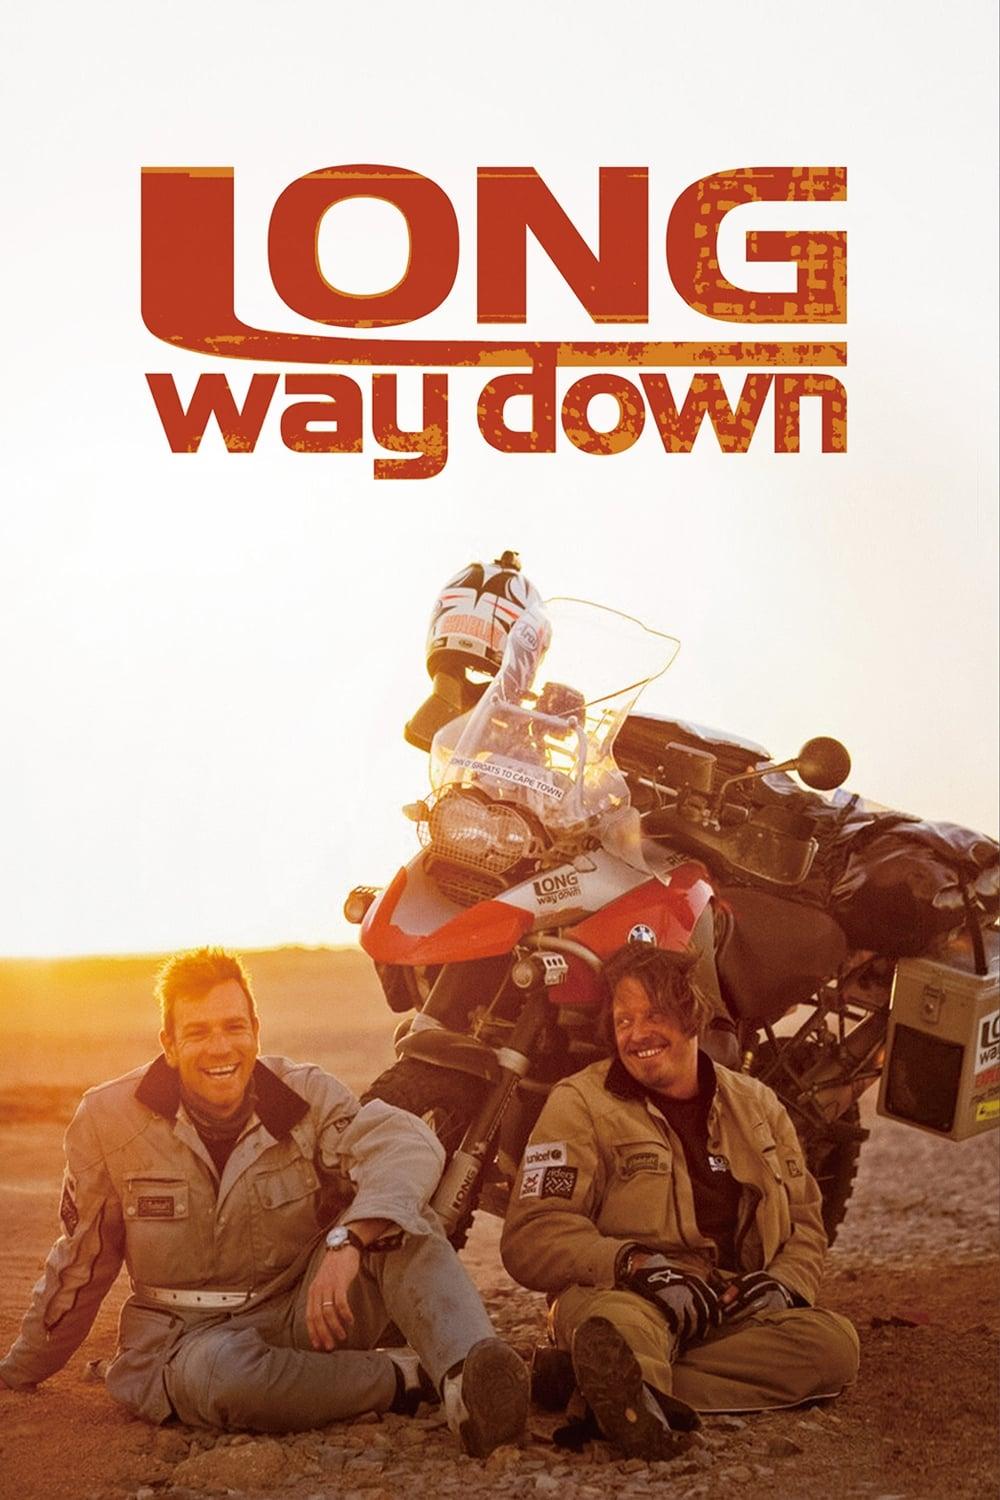 Long Way Down poster